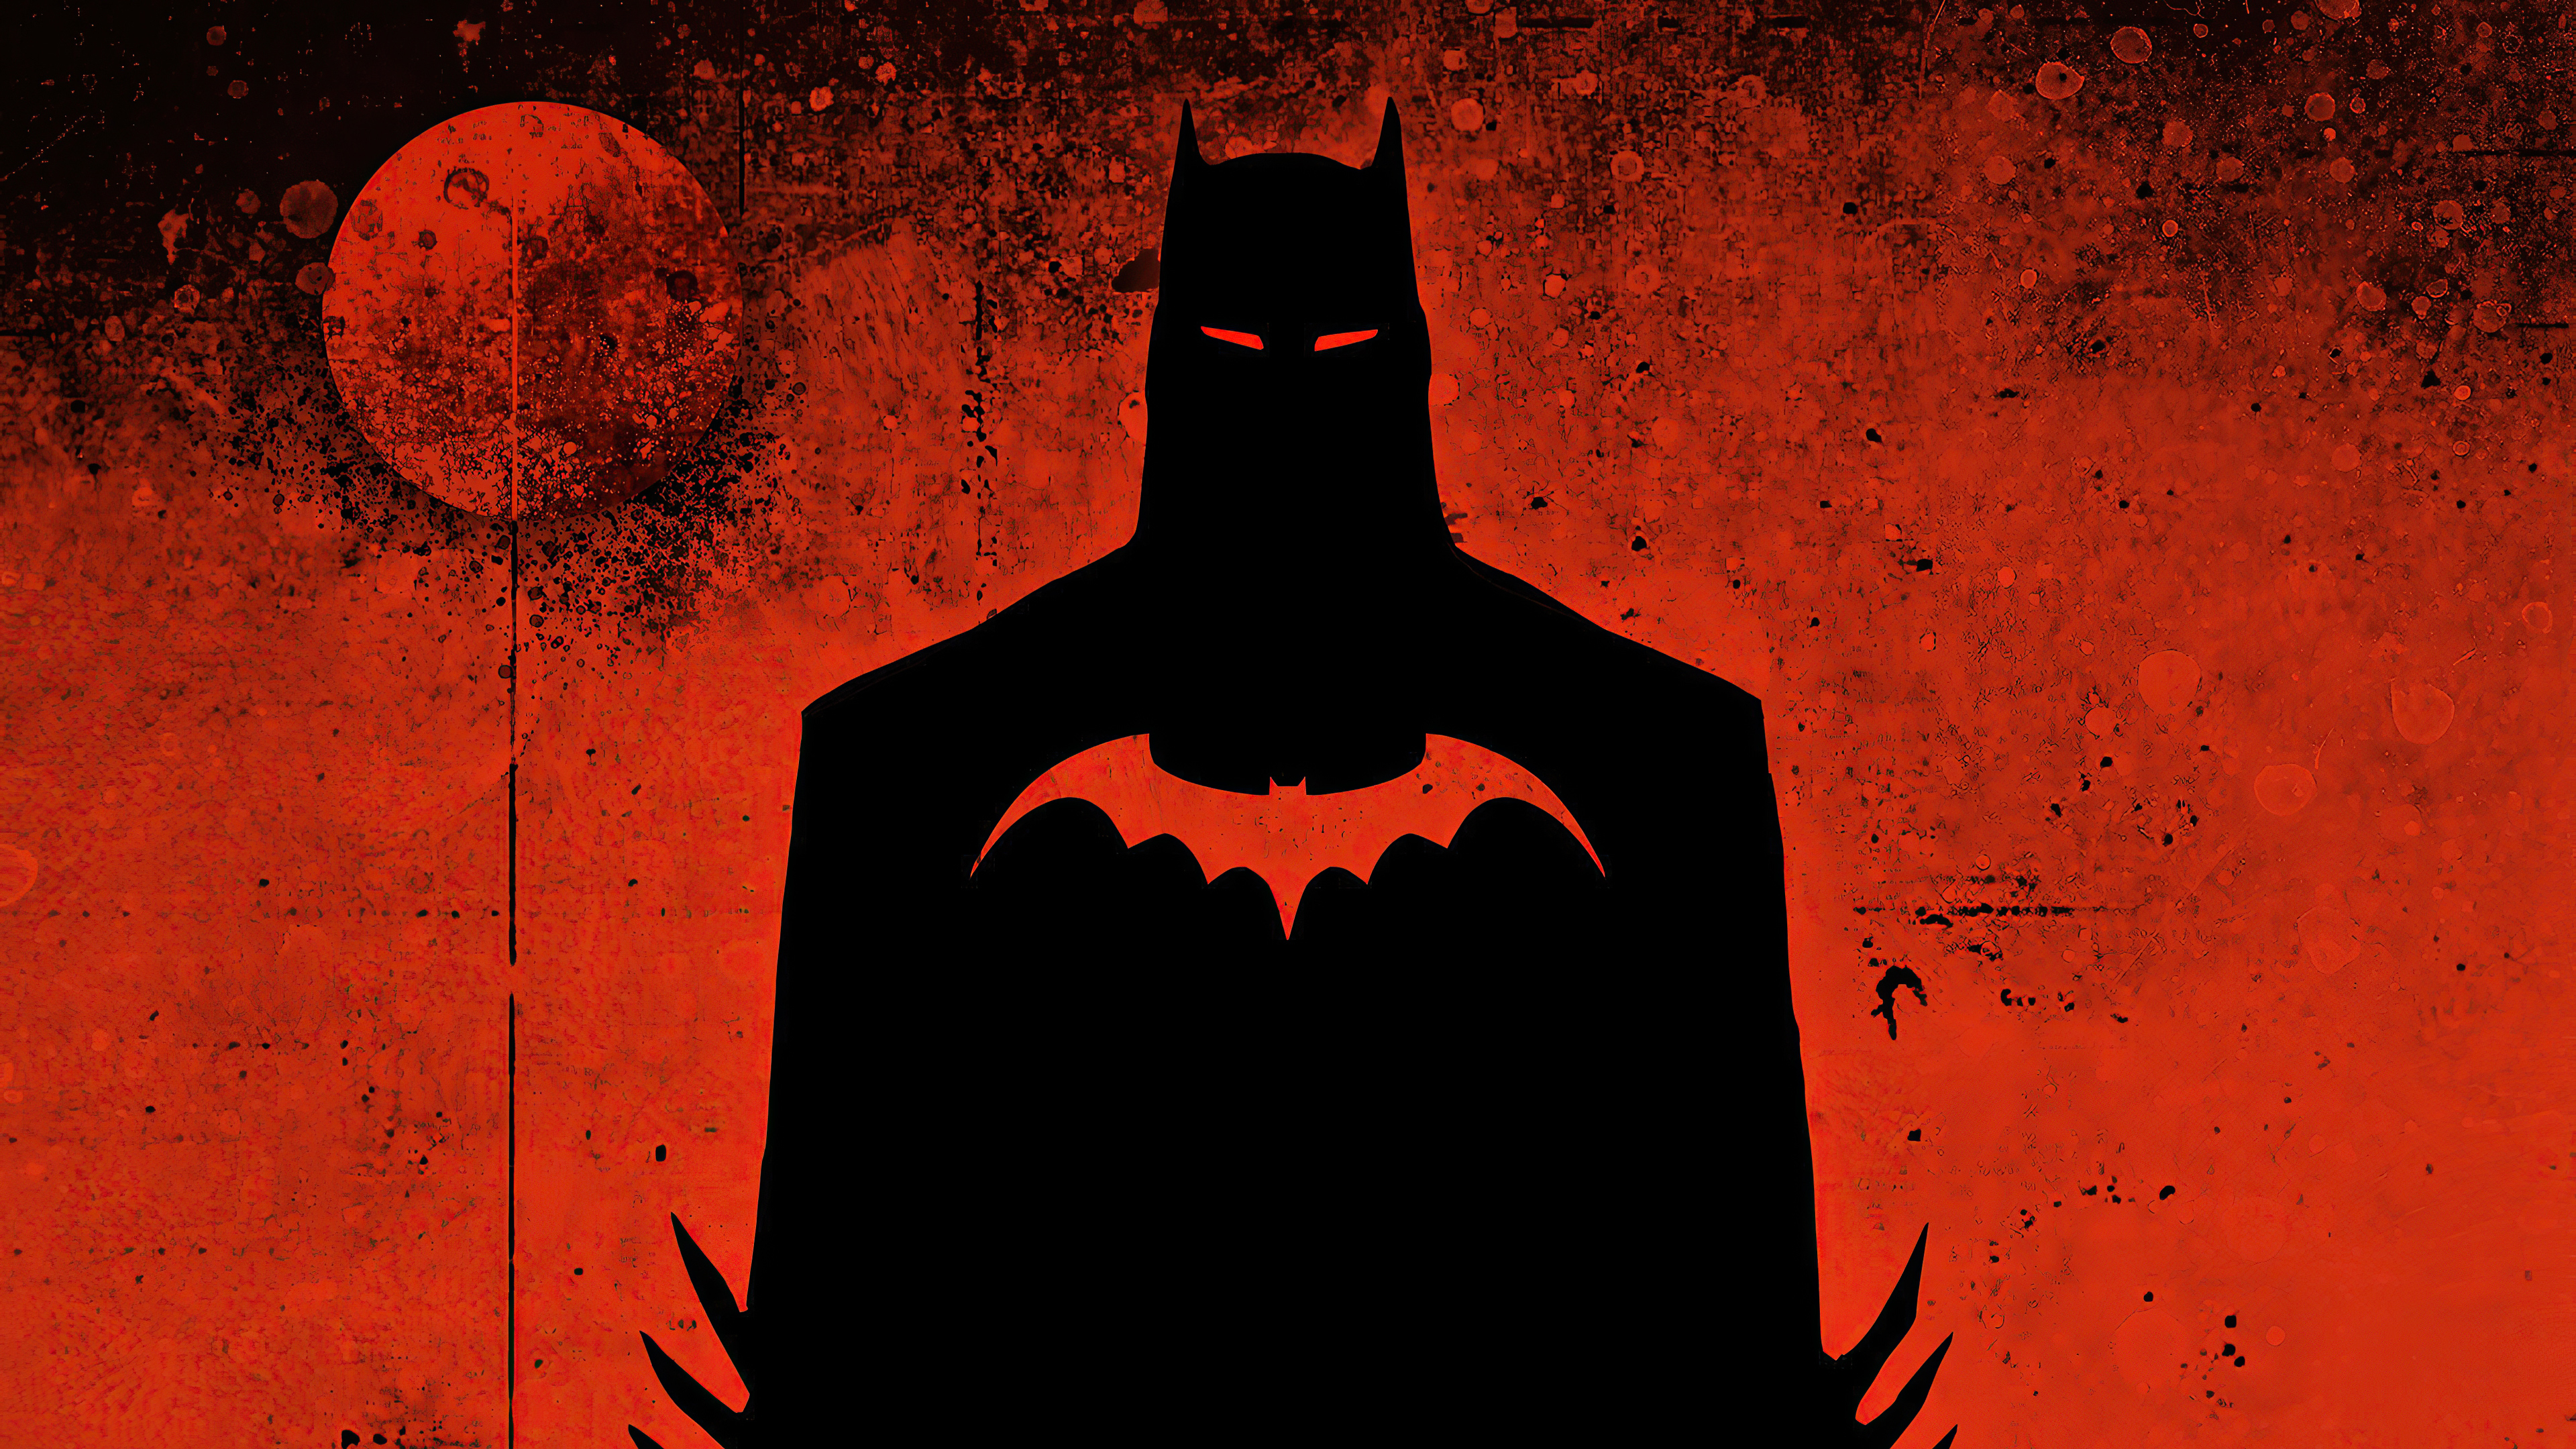 Batman New DC Comic 4K Wallpaper, HD Superheroes 4K Wallpapers, Images,  Photos and Background - Wallpapers Den